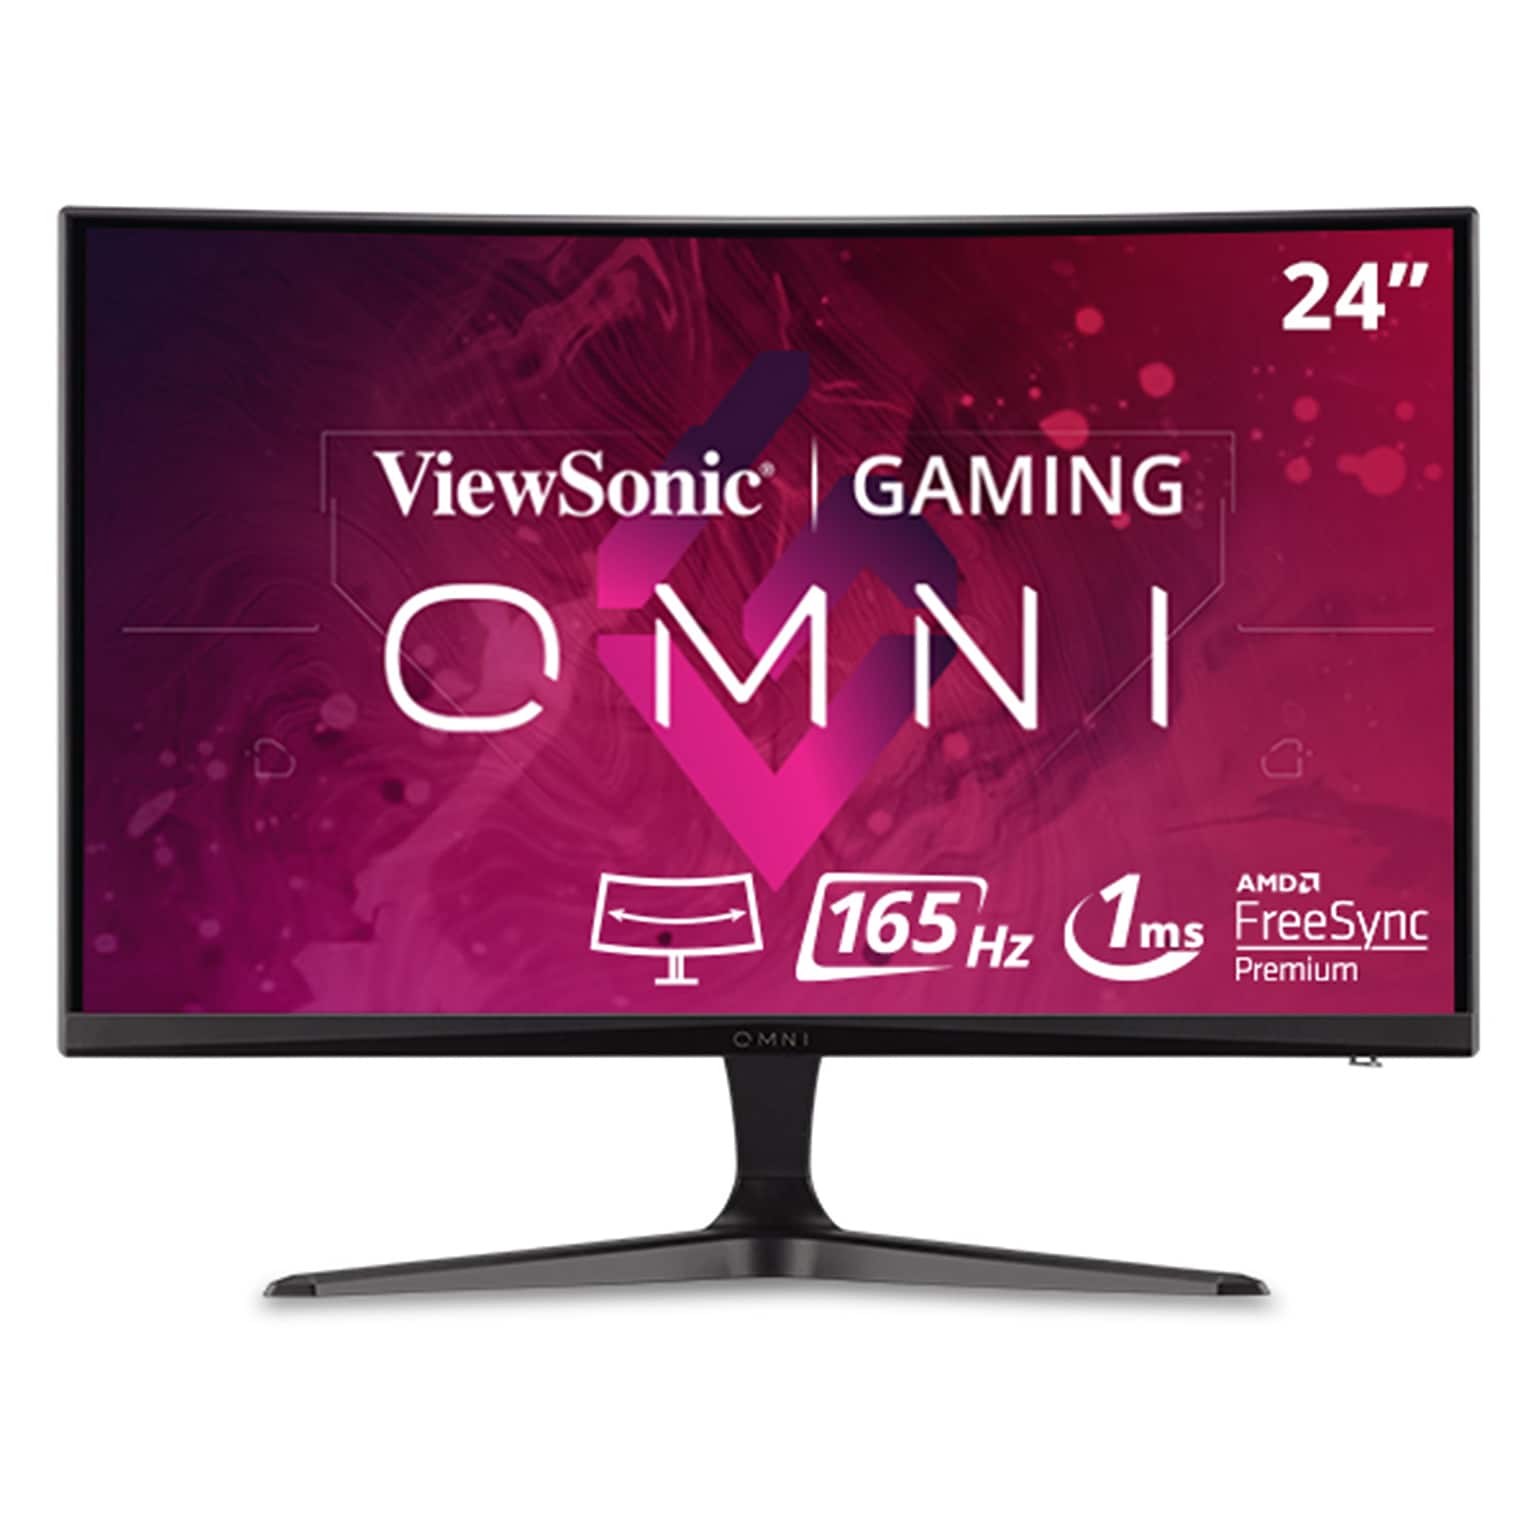 ViewSonic OMNI 24 Curved 165 Hz LED Gaming Monitor, Black (VX2418C)